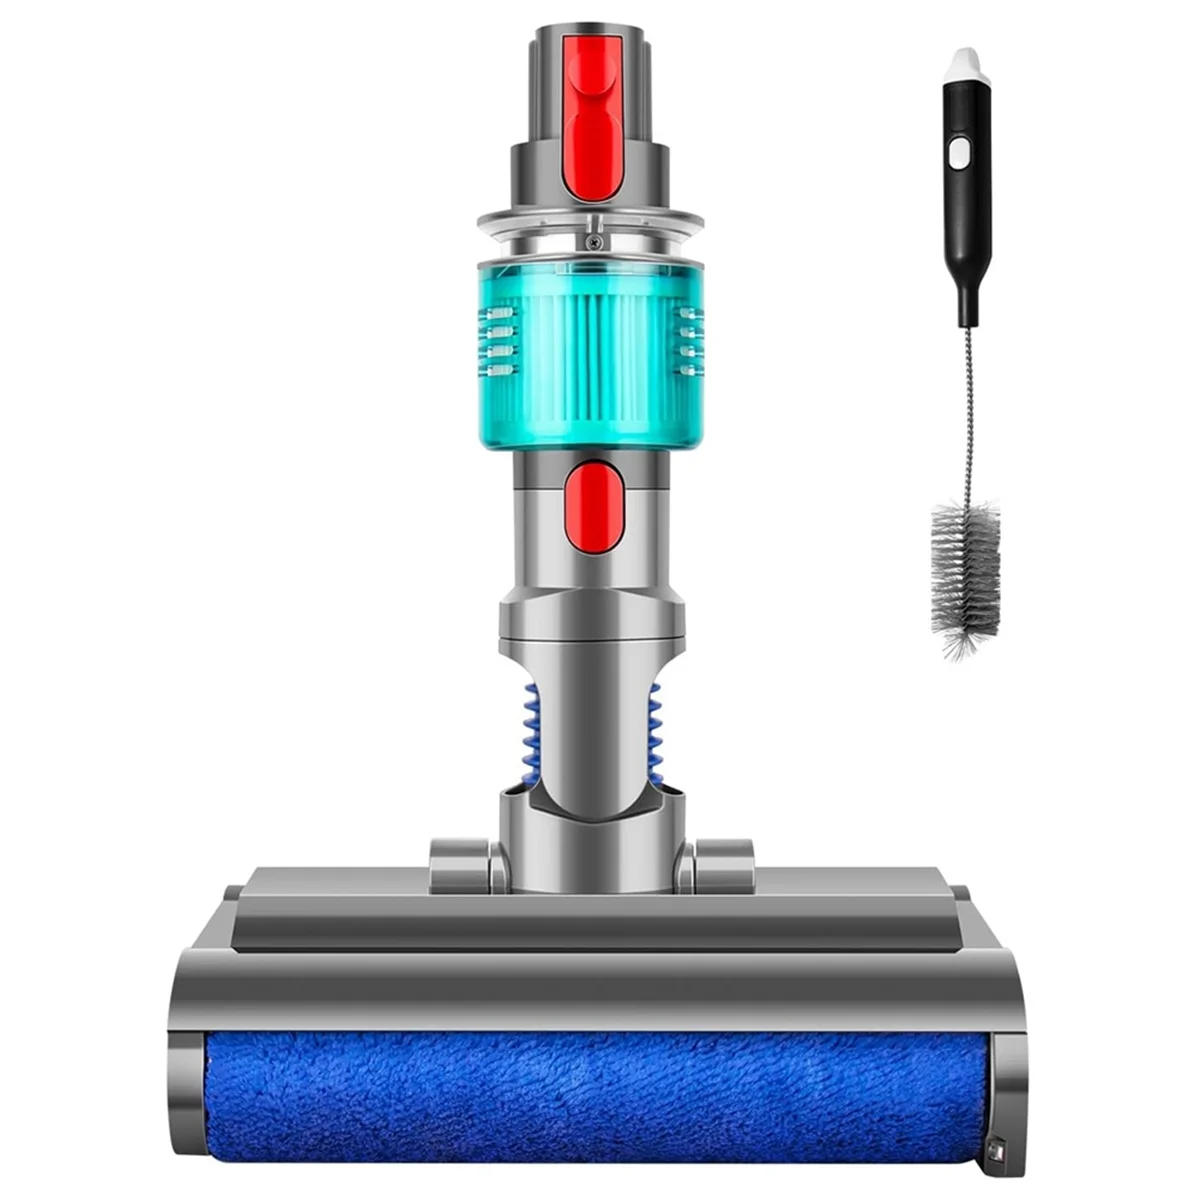 

Electric Wet Dry Mopping Head for Dyson V7 V8 V10 V11 V15 Vacuum, Cleaning Roller Brush for Hard Floors and Area Rugs